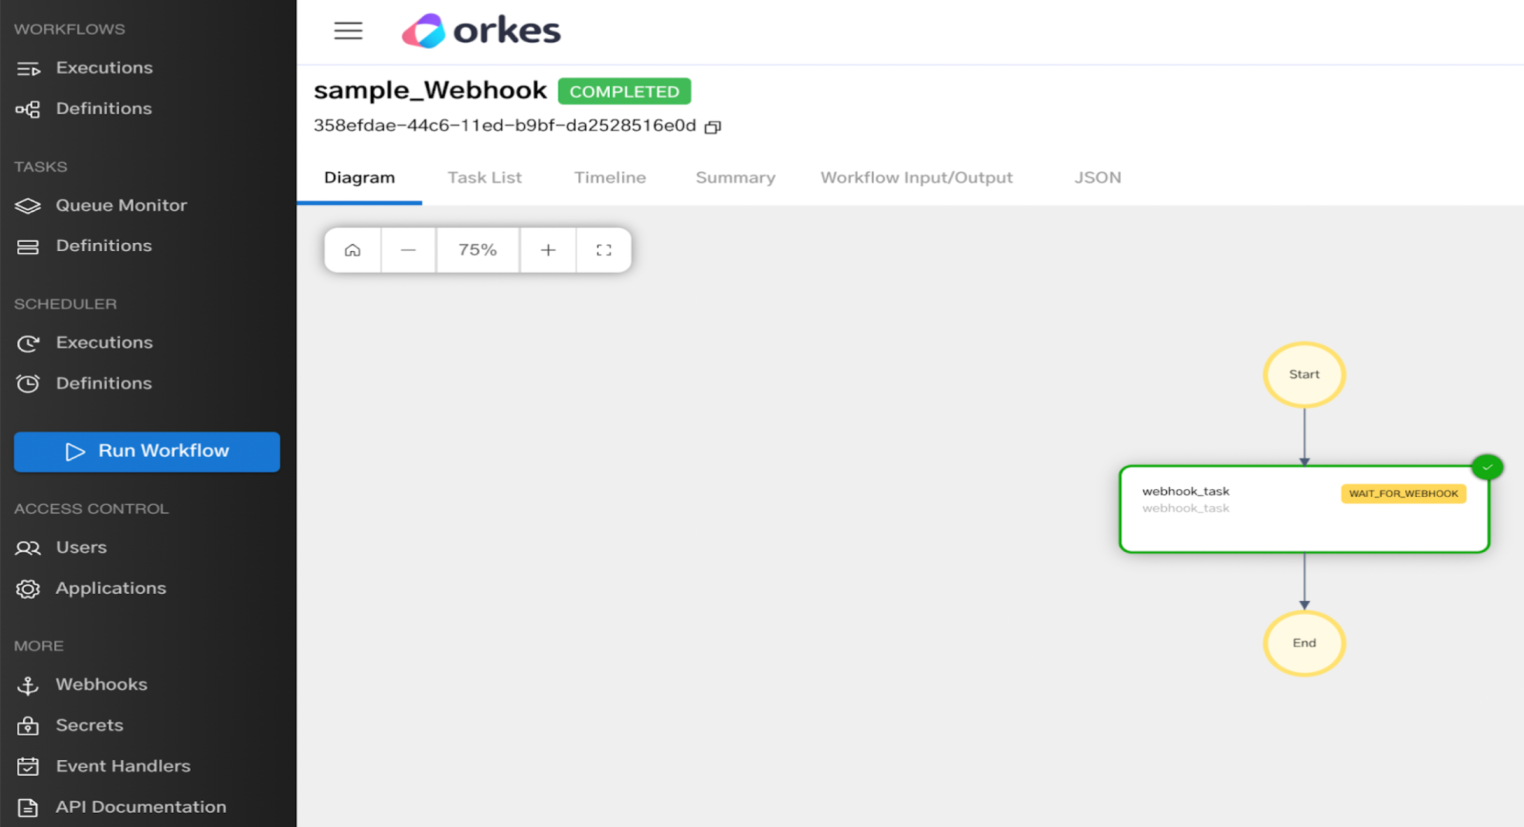 Webhook workflow in COMPLETED status